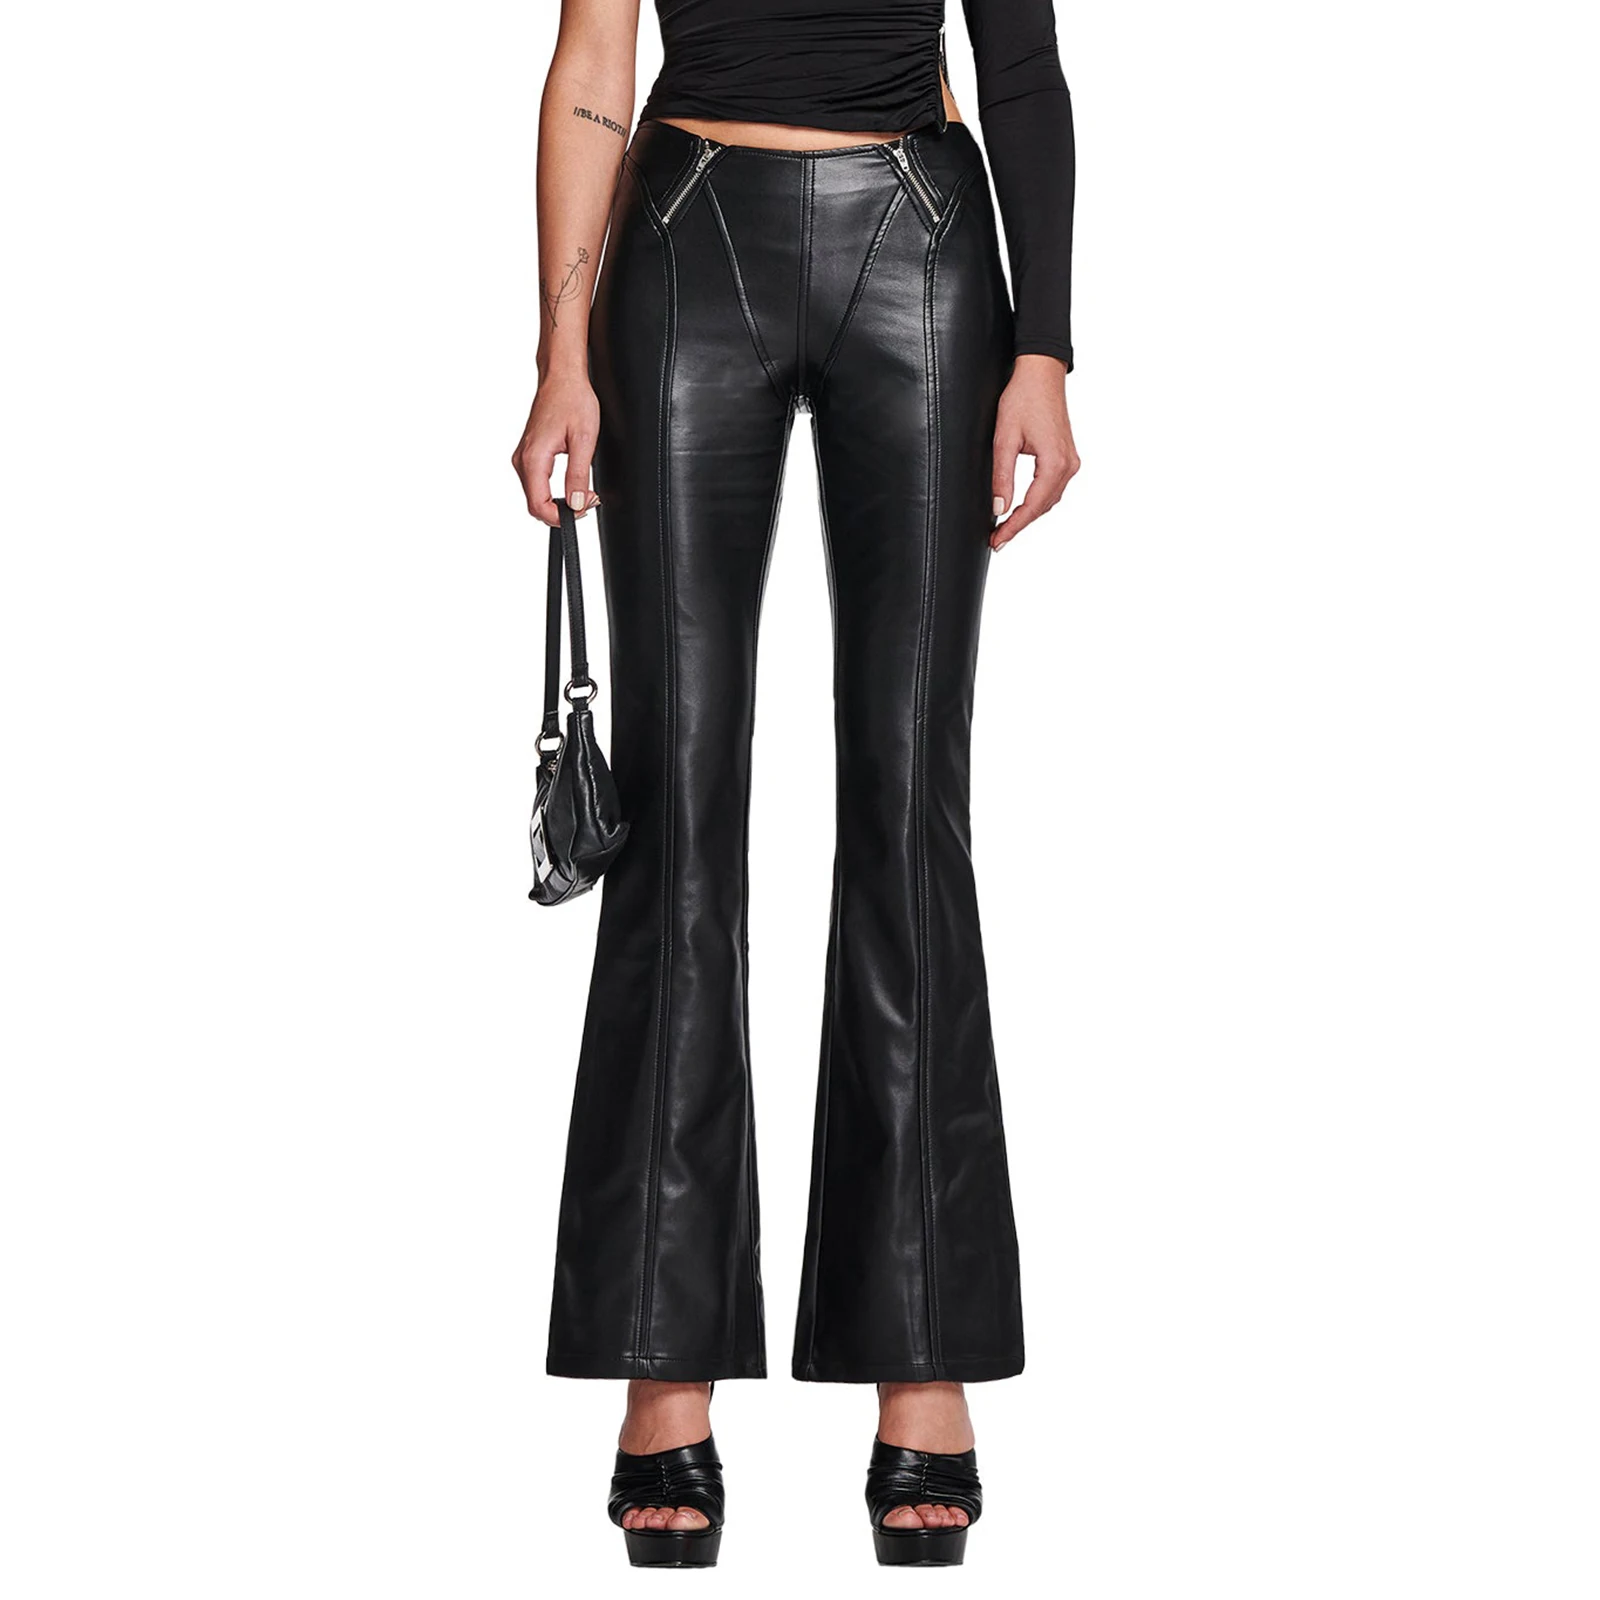 Women's PU Leather Pants Black Fashion Mid Waist Skinny Zipper Flared Pants Casual Trousers Streetwear